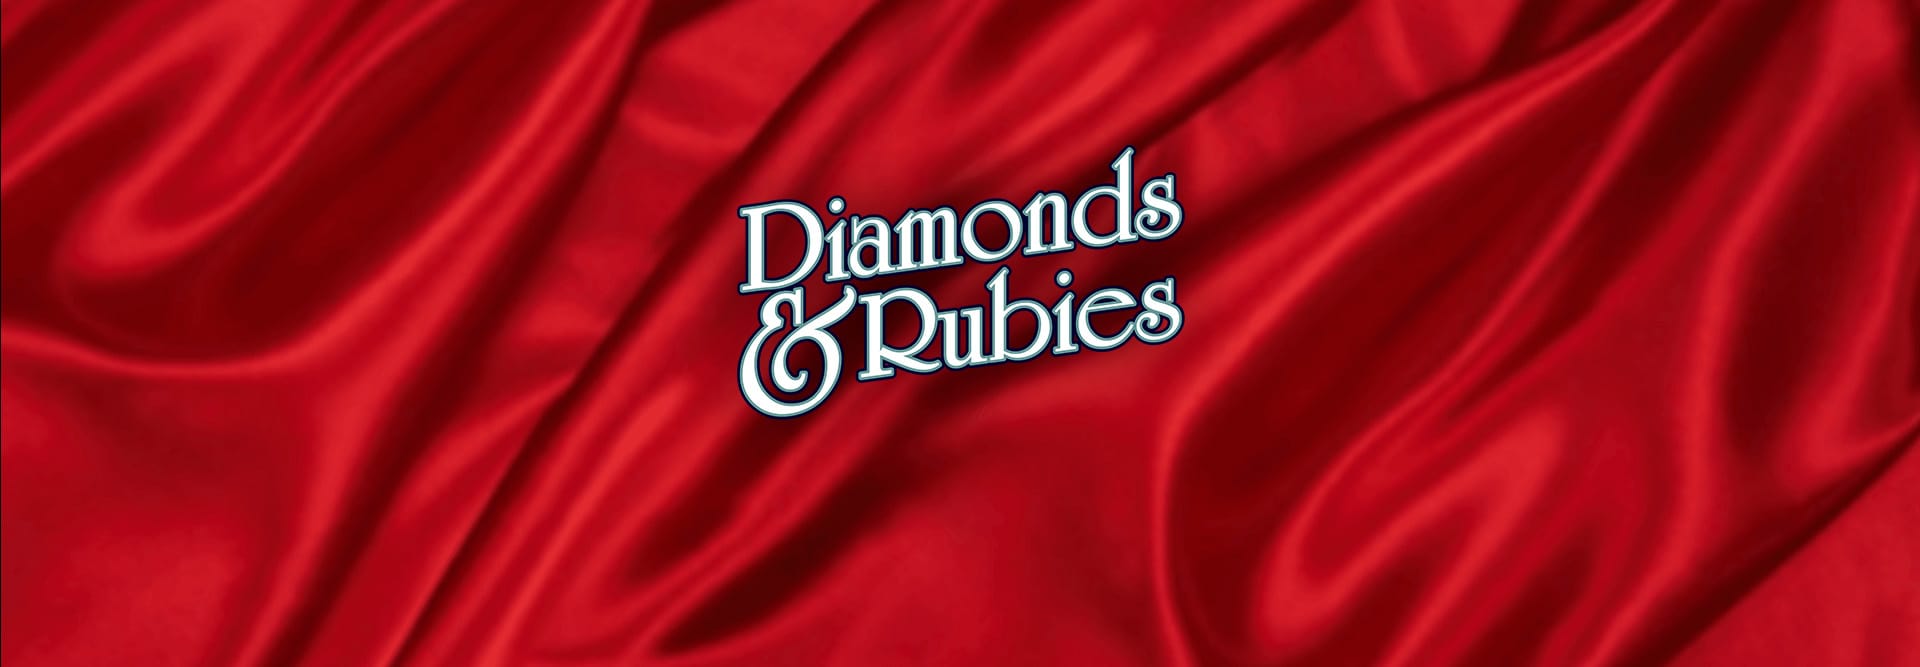 Diamonds & Rubies - Game Banner